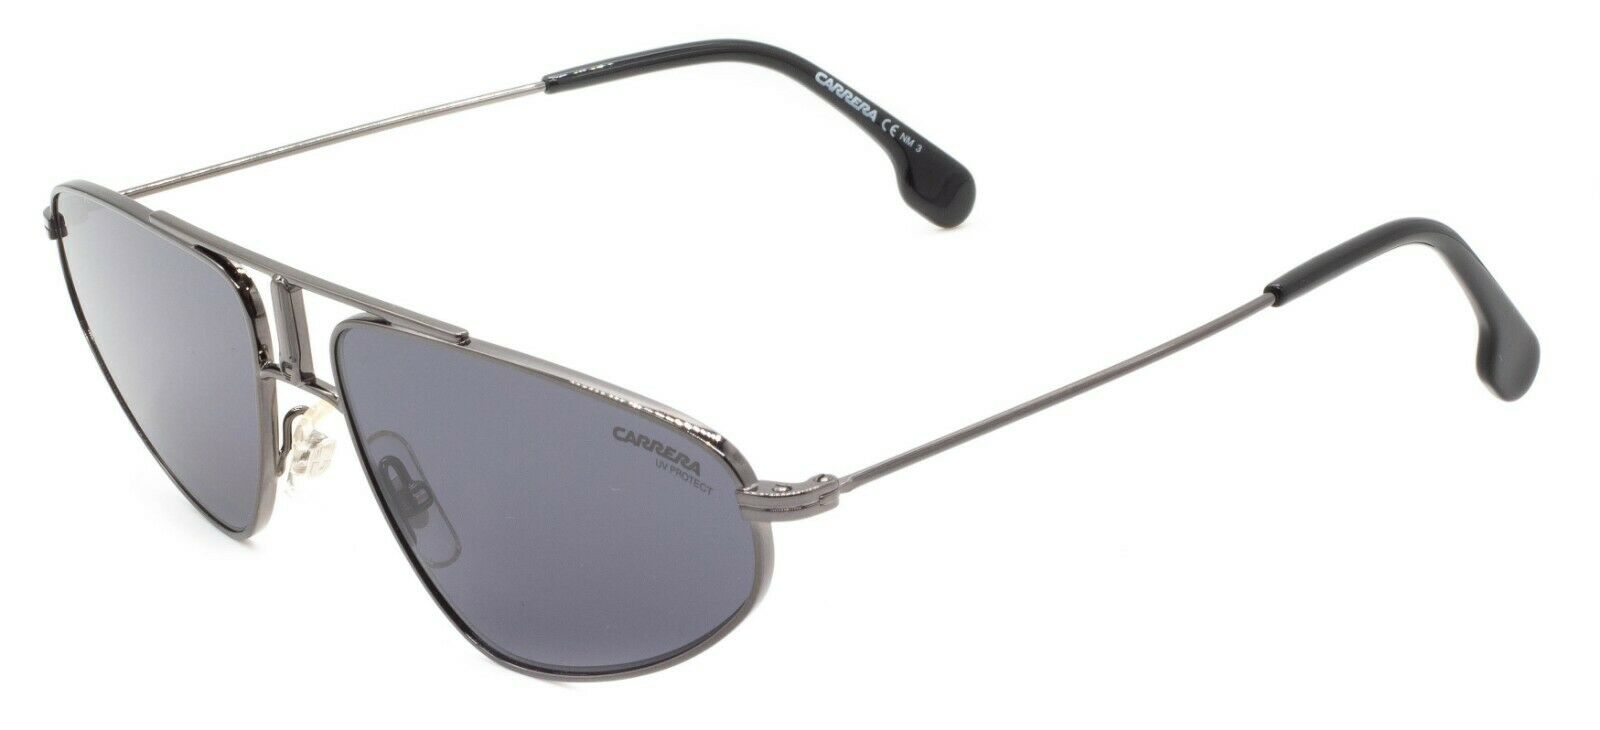 CARRERA 1021/S V812K 58mm SUNGLASSES FRAMES Shades Eyewear Glasses Italy -  New - GGV Eyewear